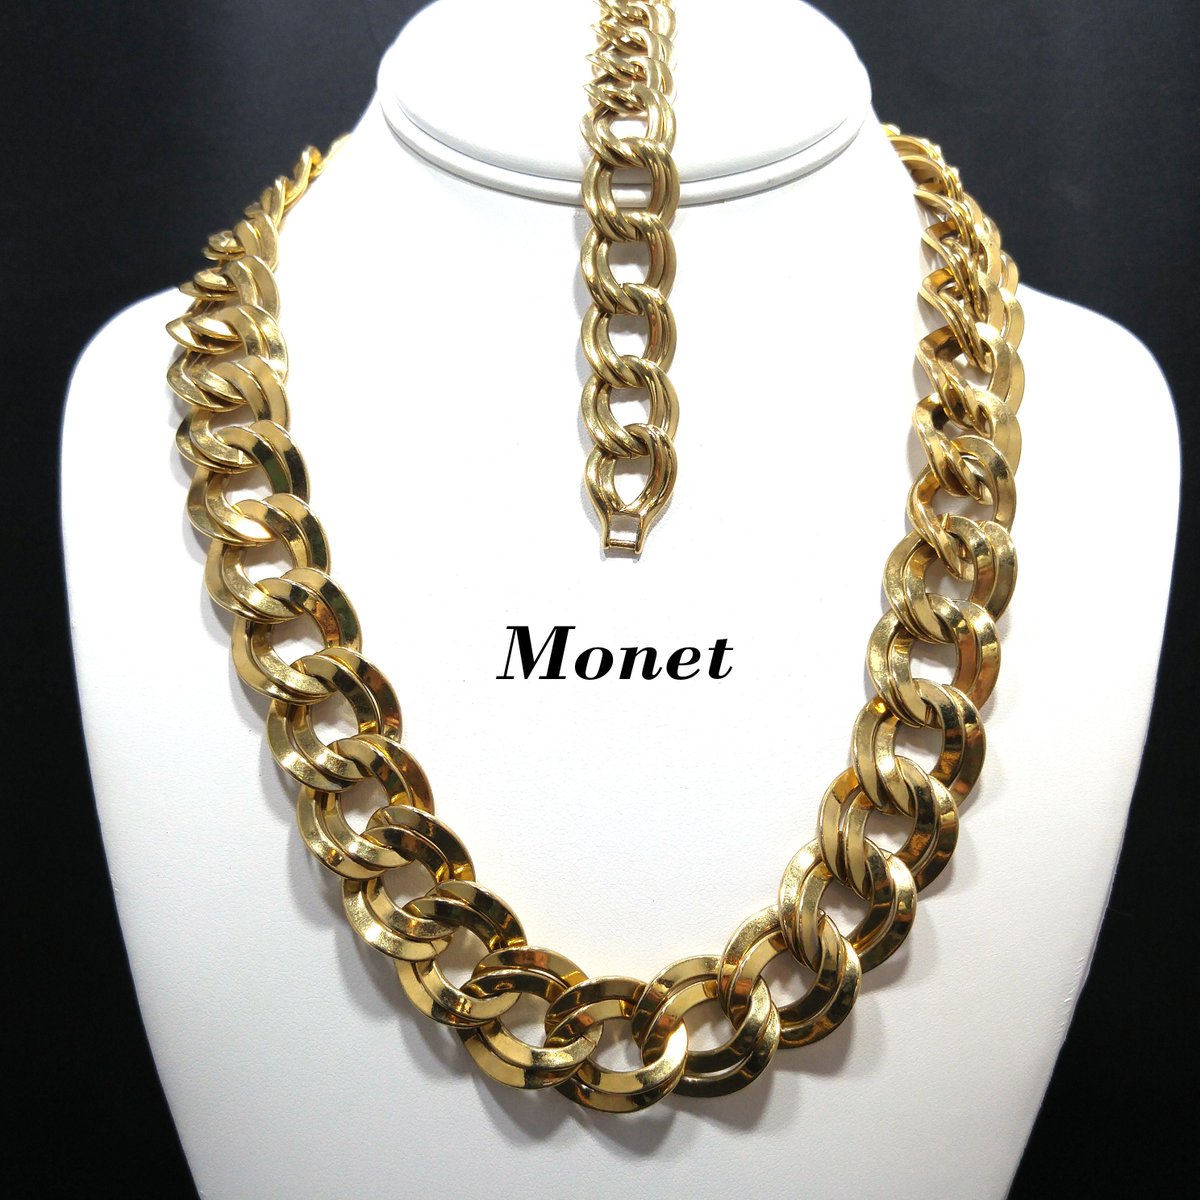 #etsy shop: Monet Wide Link Necklace Bracelet Set, Double Links, 1980s Vintage Jewelry etsy.me/3qpEsCS #gold #women #monetnecklace #monetbracelet #vintagemonet #vintagejewelry #vintagenecklace #vintagebracelet #goldplated